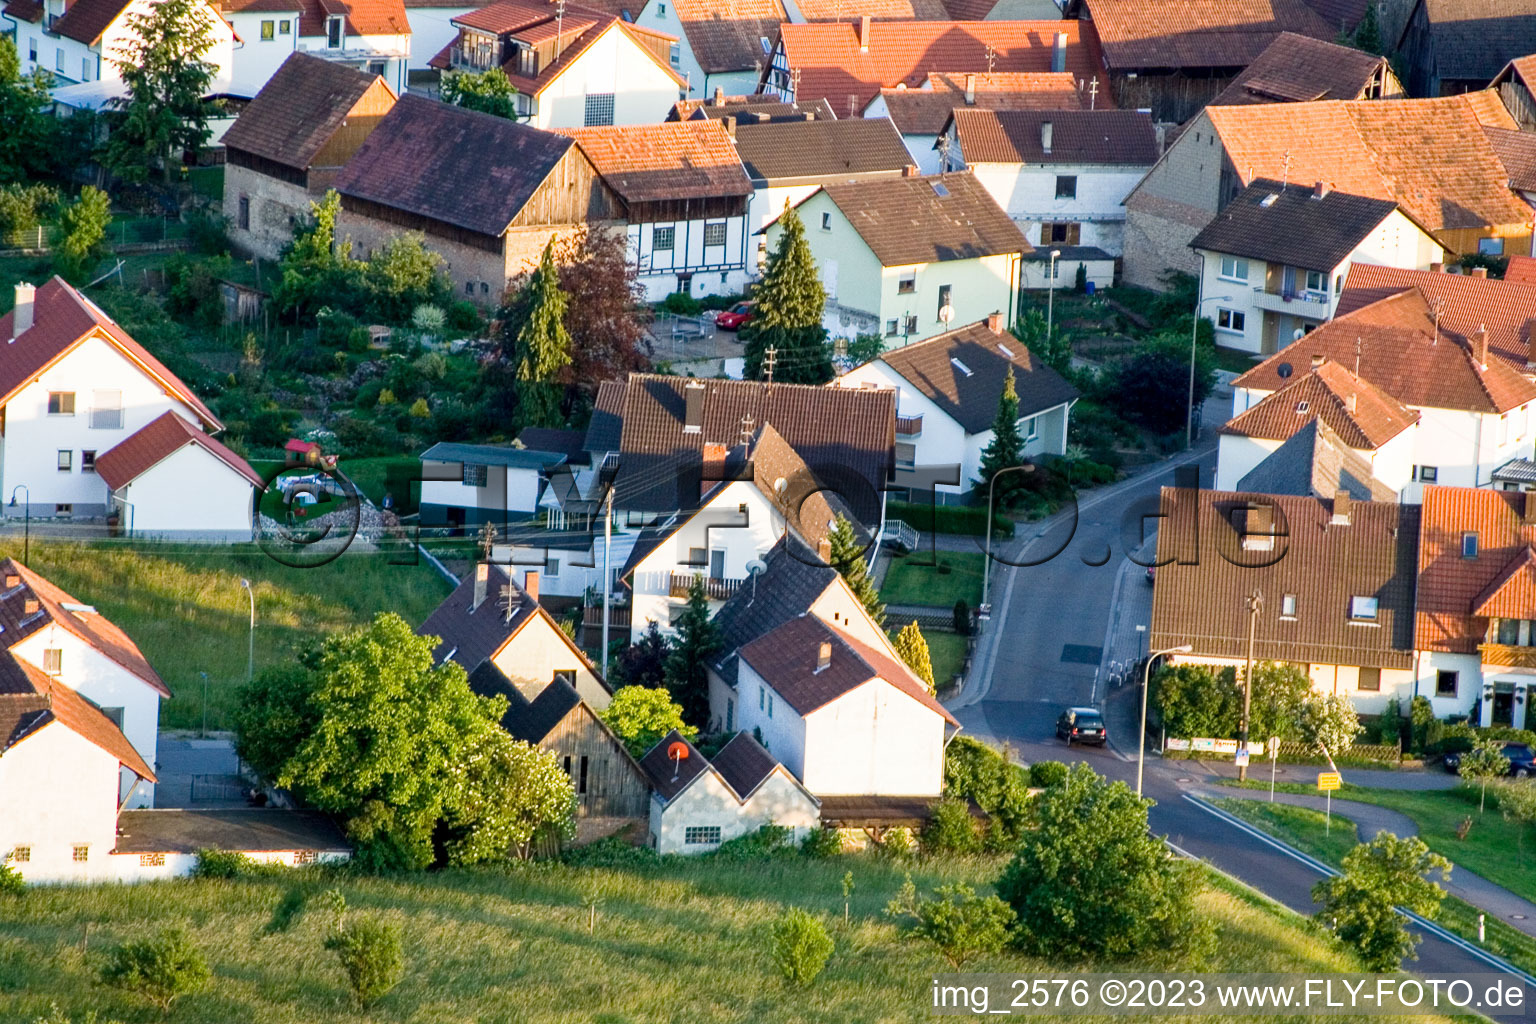 Drone image of District Büchelberg in Wörth am Rhein in the state Rhineland-Palatinate, Germany